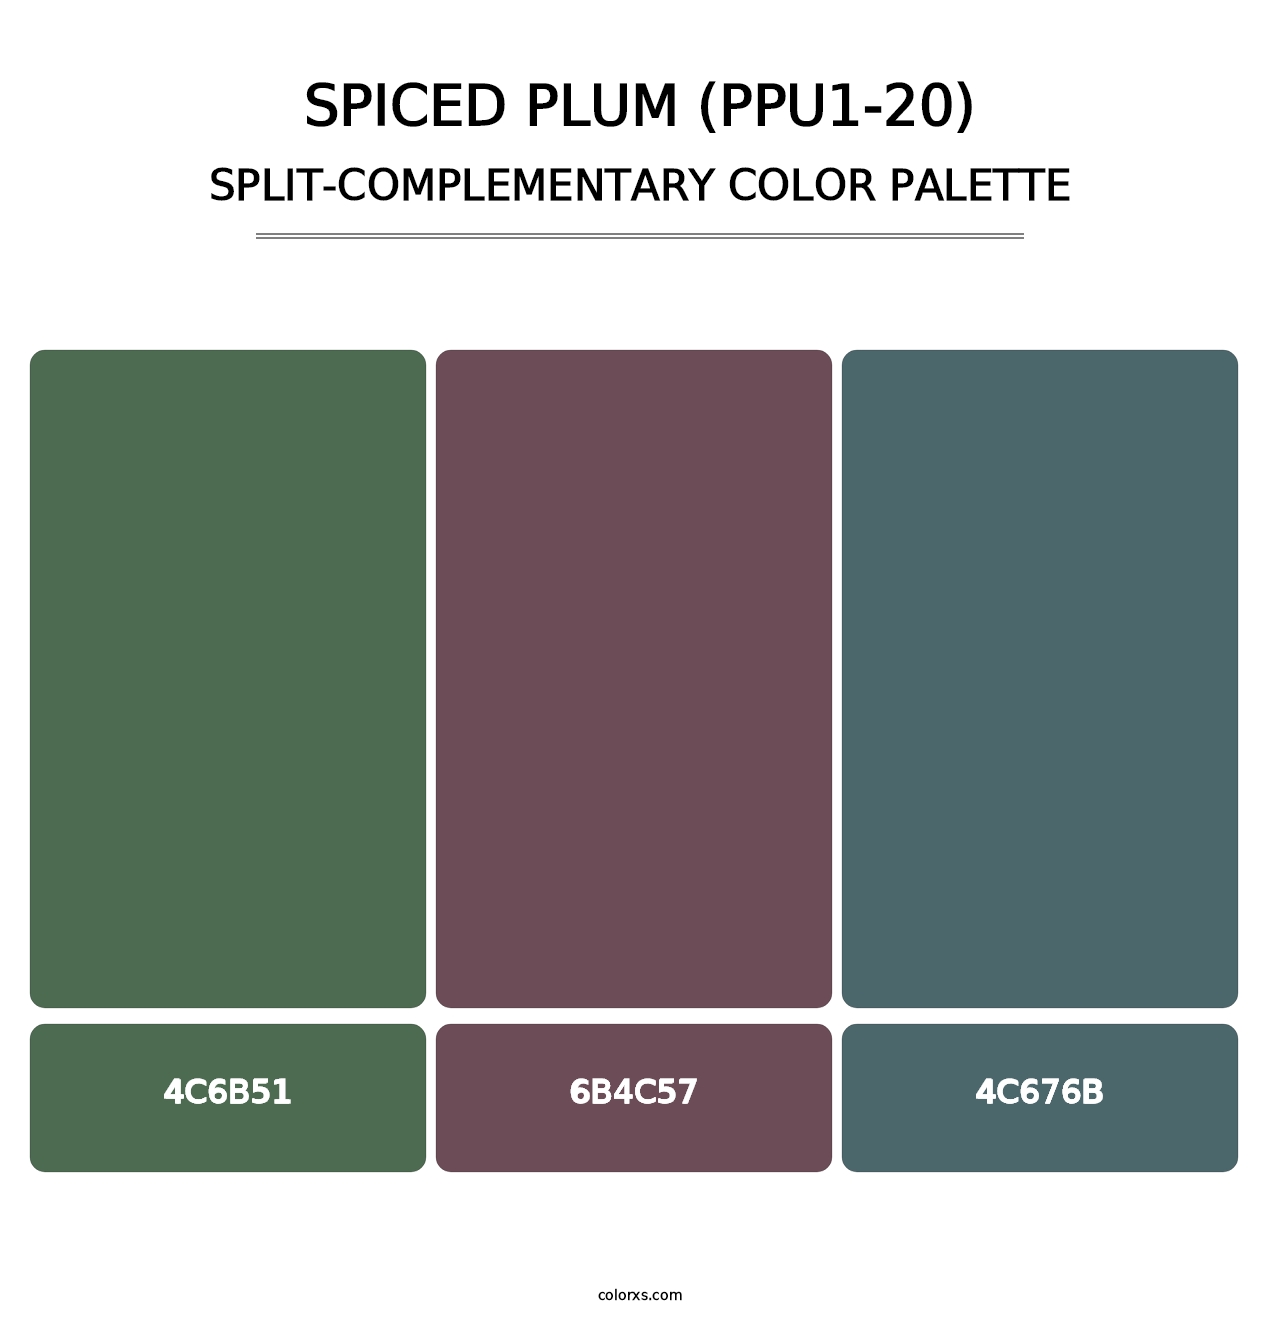 Spiced Plum (PPU1-20) - Split-Complementary Color Palette